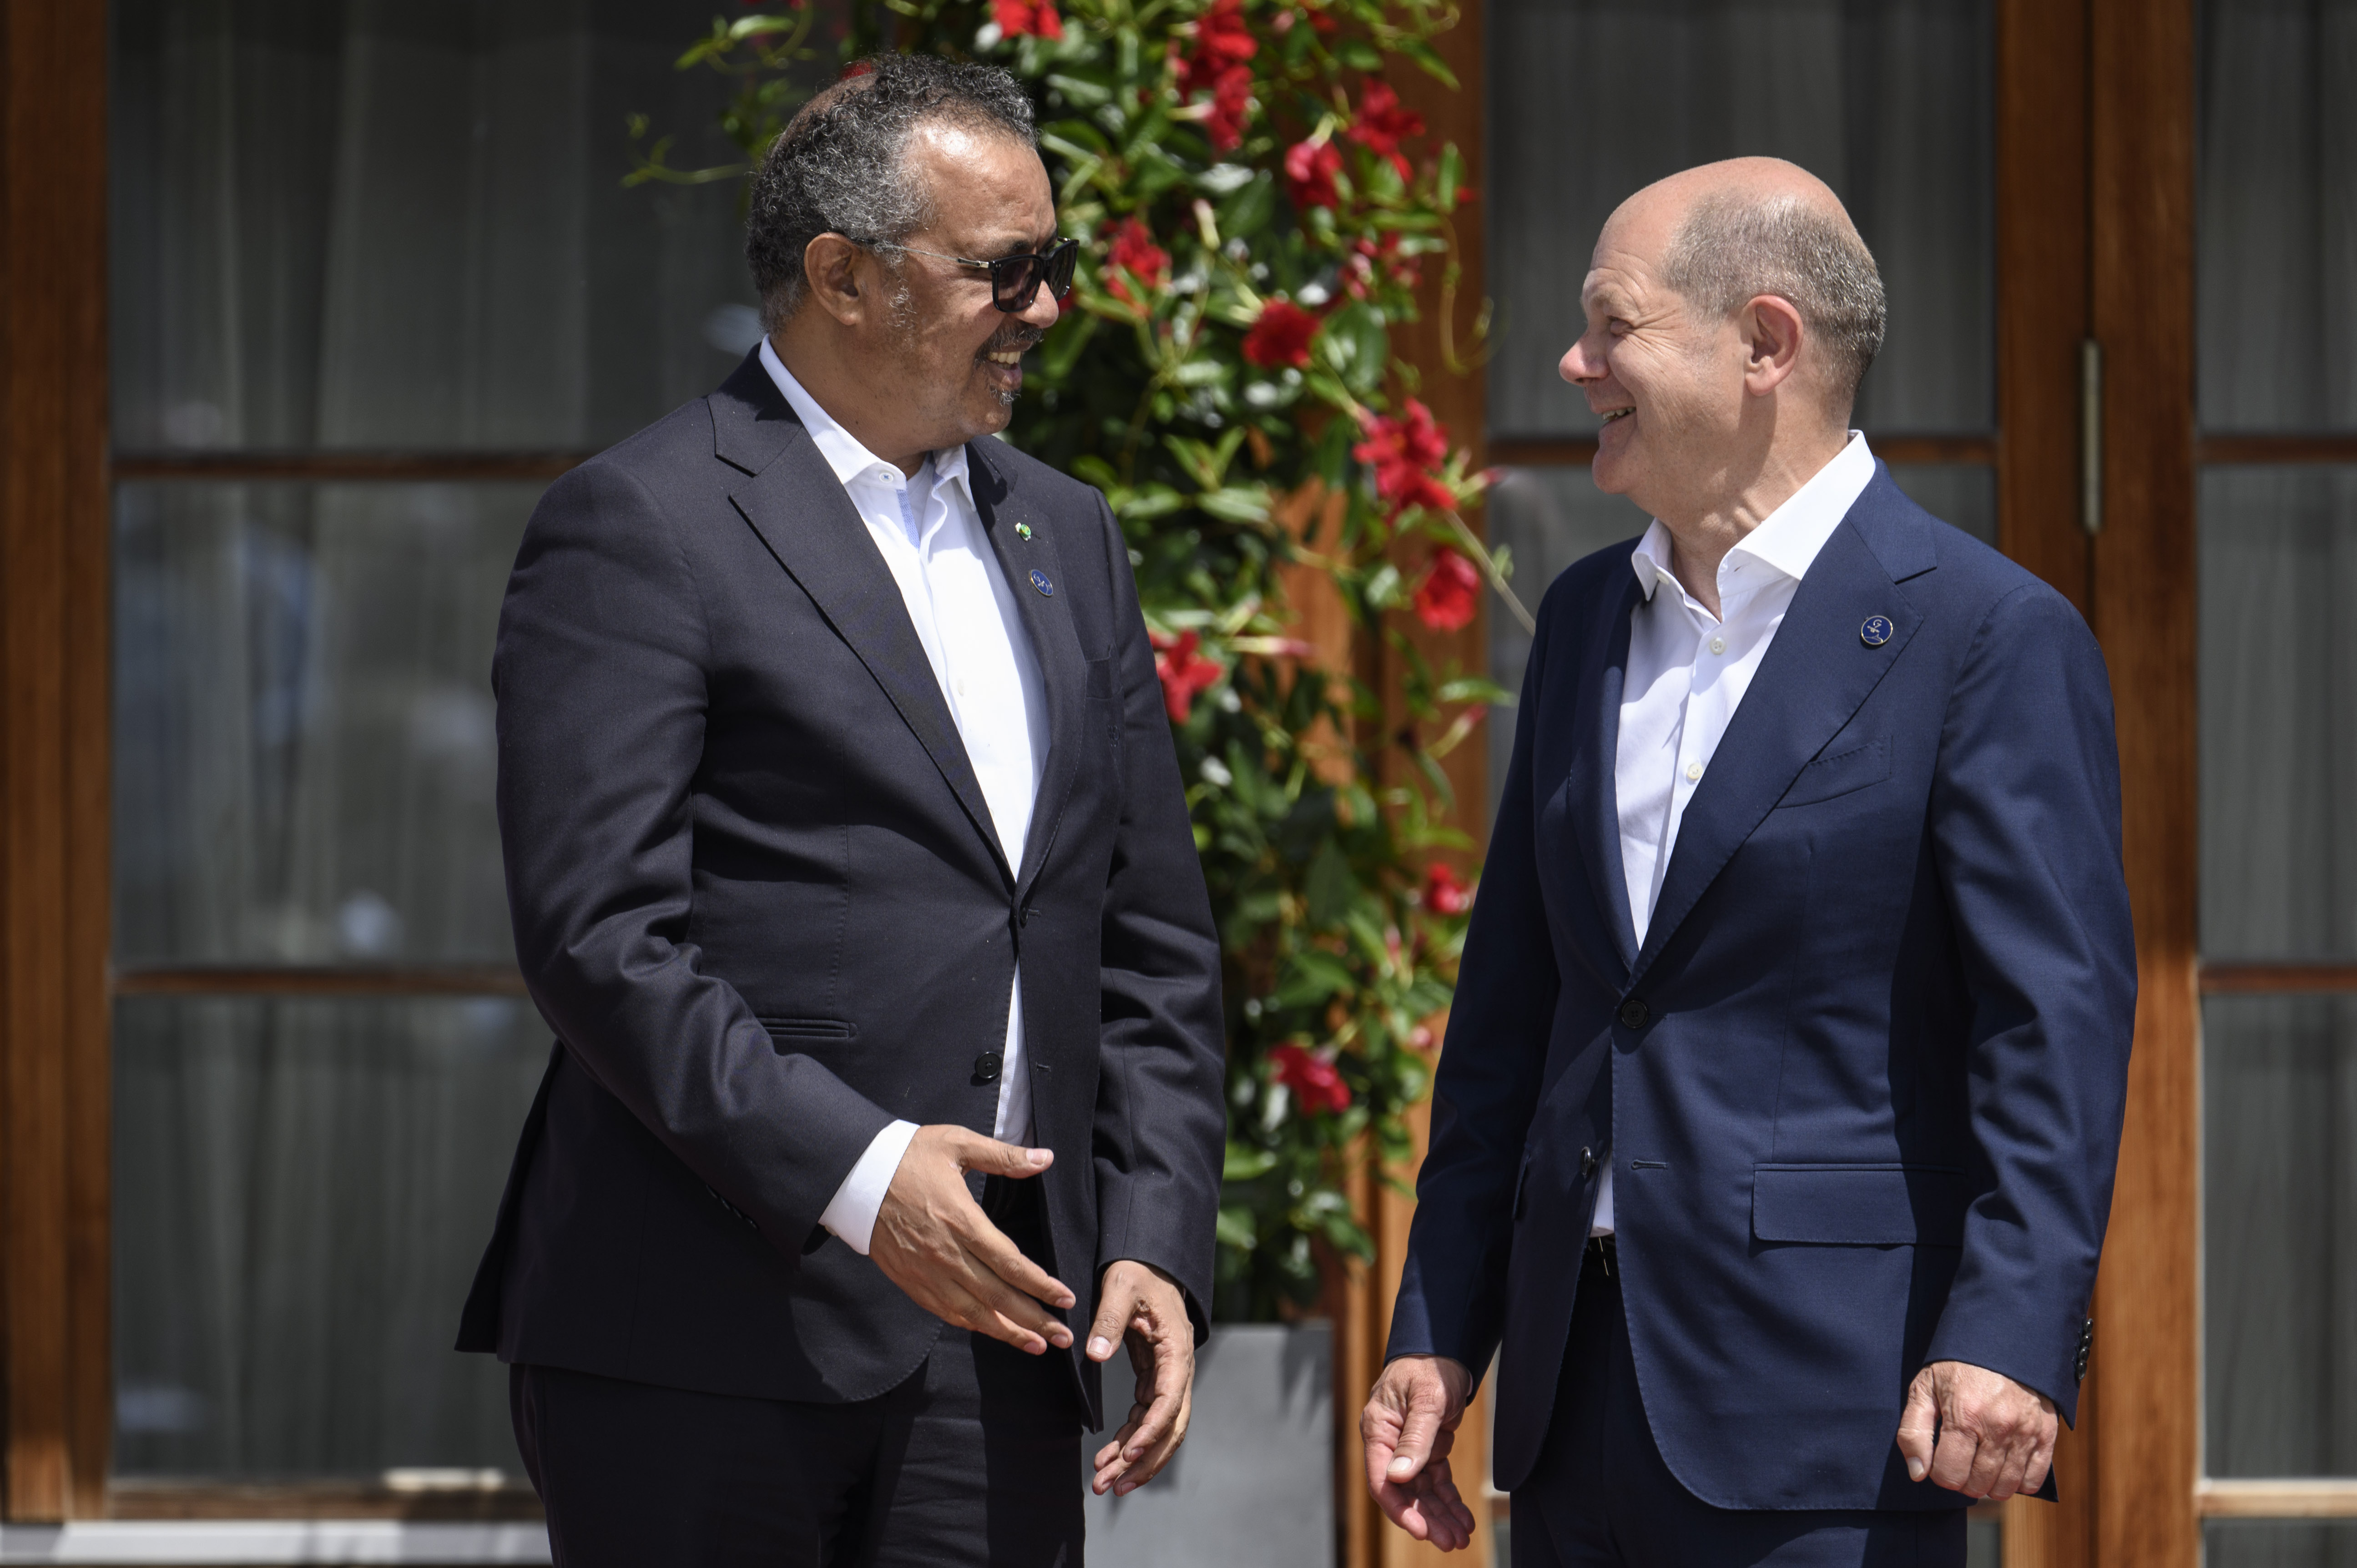 Federal Chancellor Olaf Scholz welcomes Tedros Adhanom Ghebreyesus, Director-General of the World Health Organization (WHO), to Schloss Elmau.